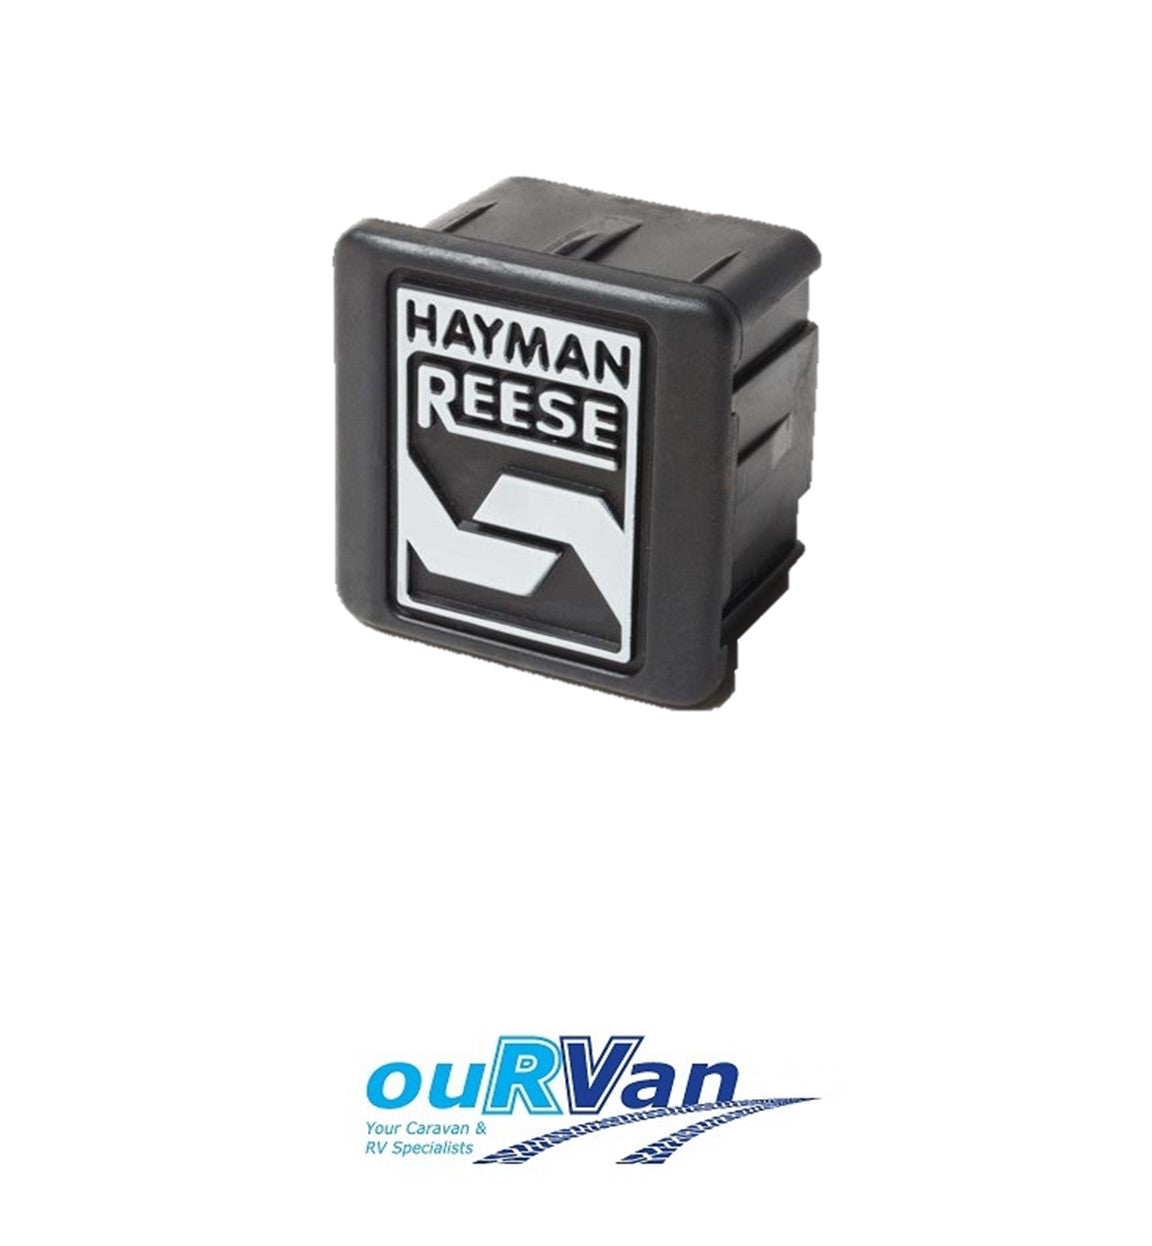 Hayman Reese 50 X 50 Tow Bar Hitch Receiver Insert Blank Plug Rubber Insert